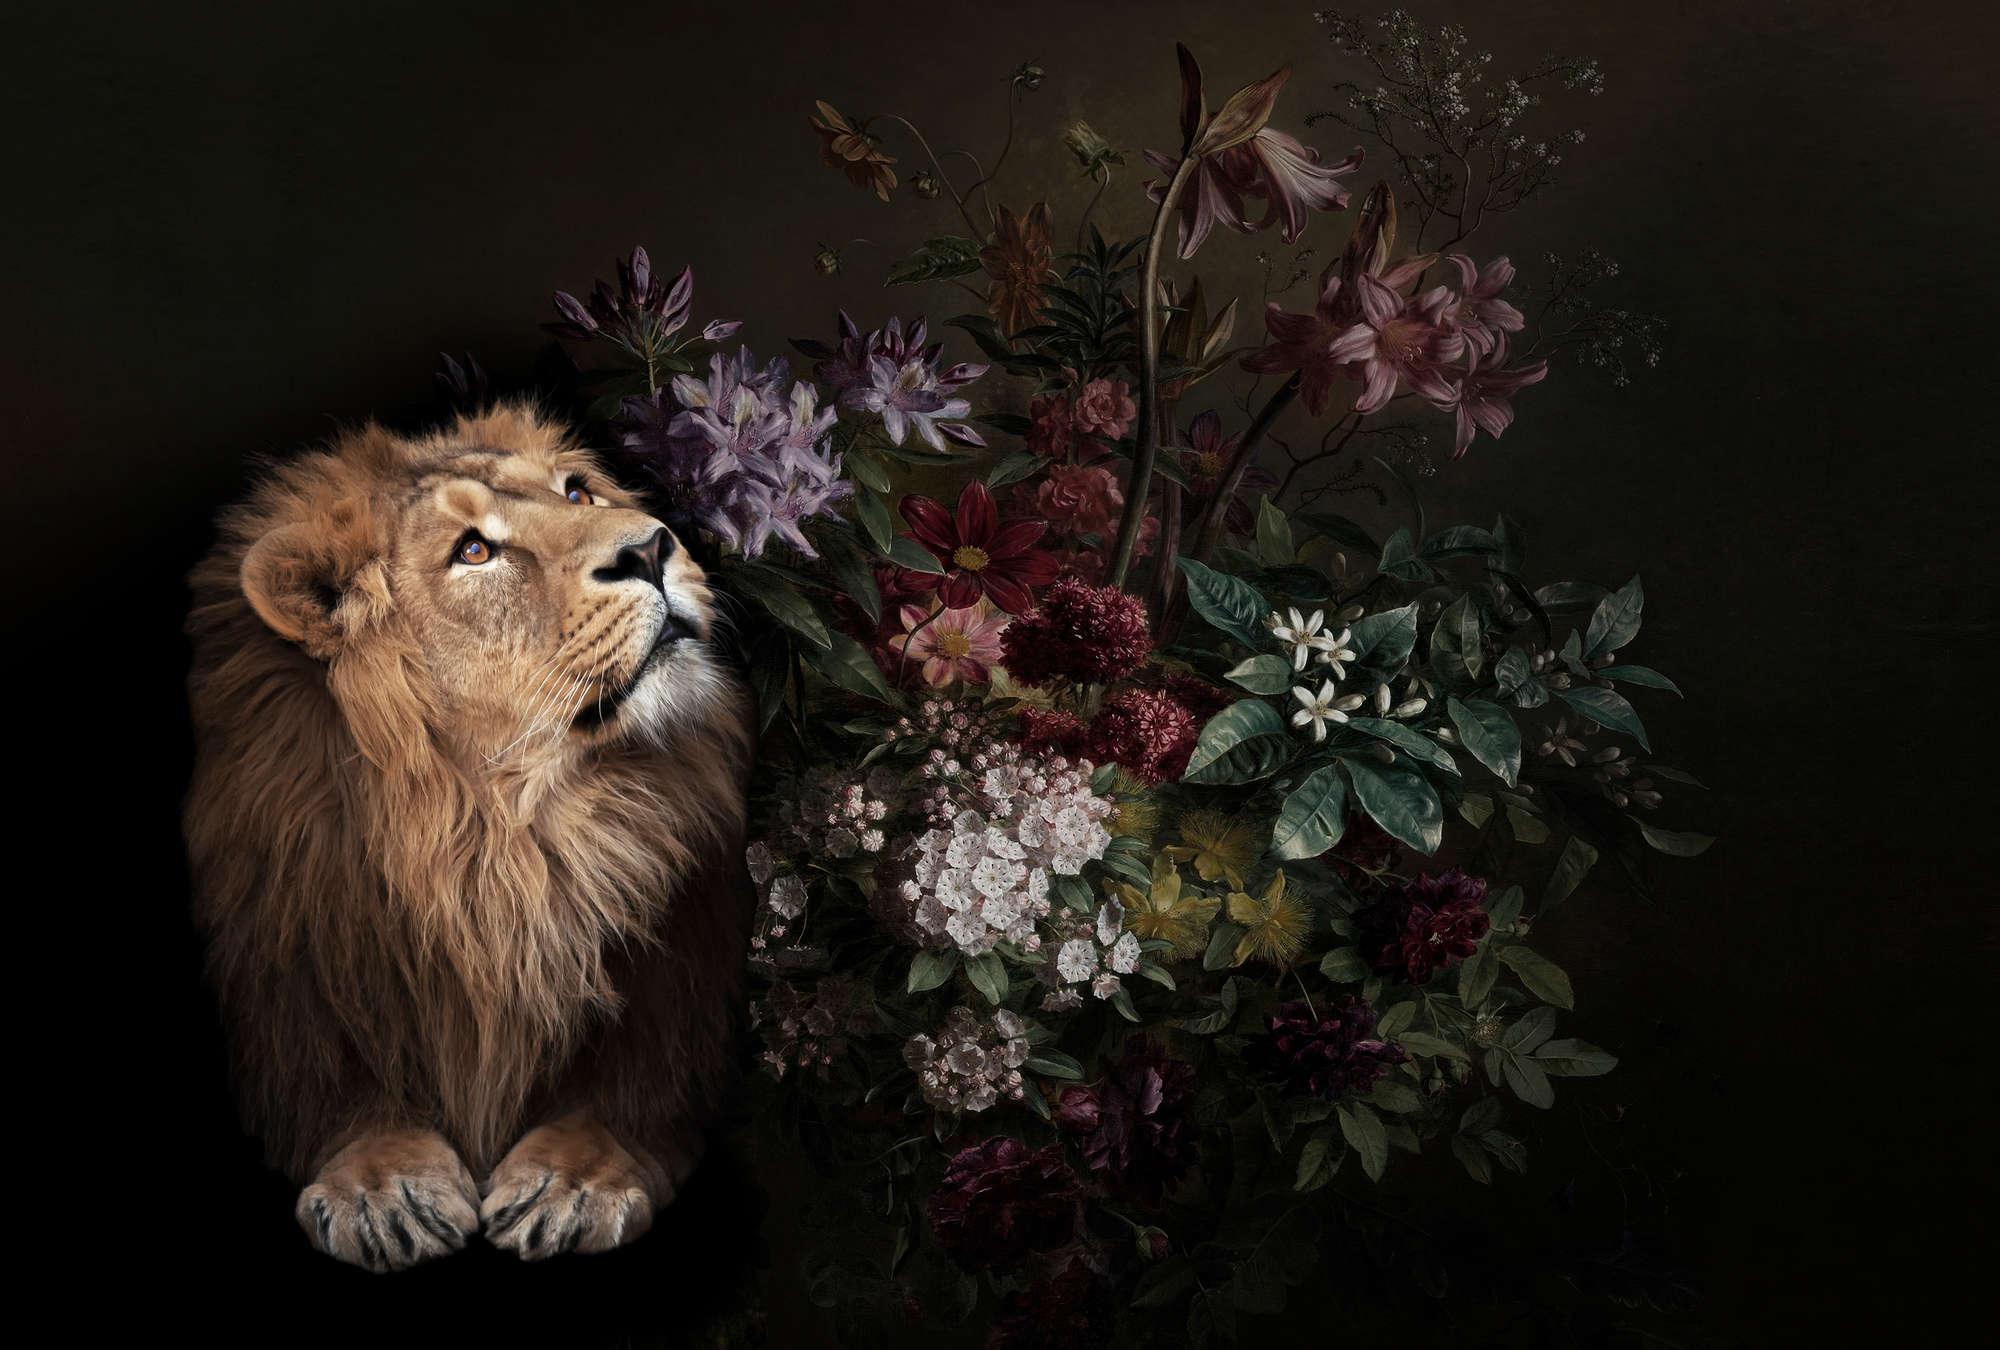             Photo wallpaper lion portrait with flowers - Walls by Patel
        